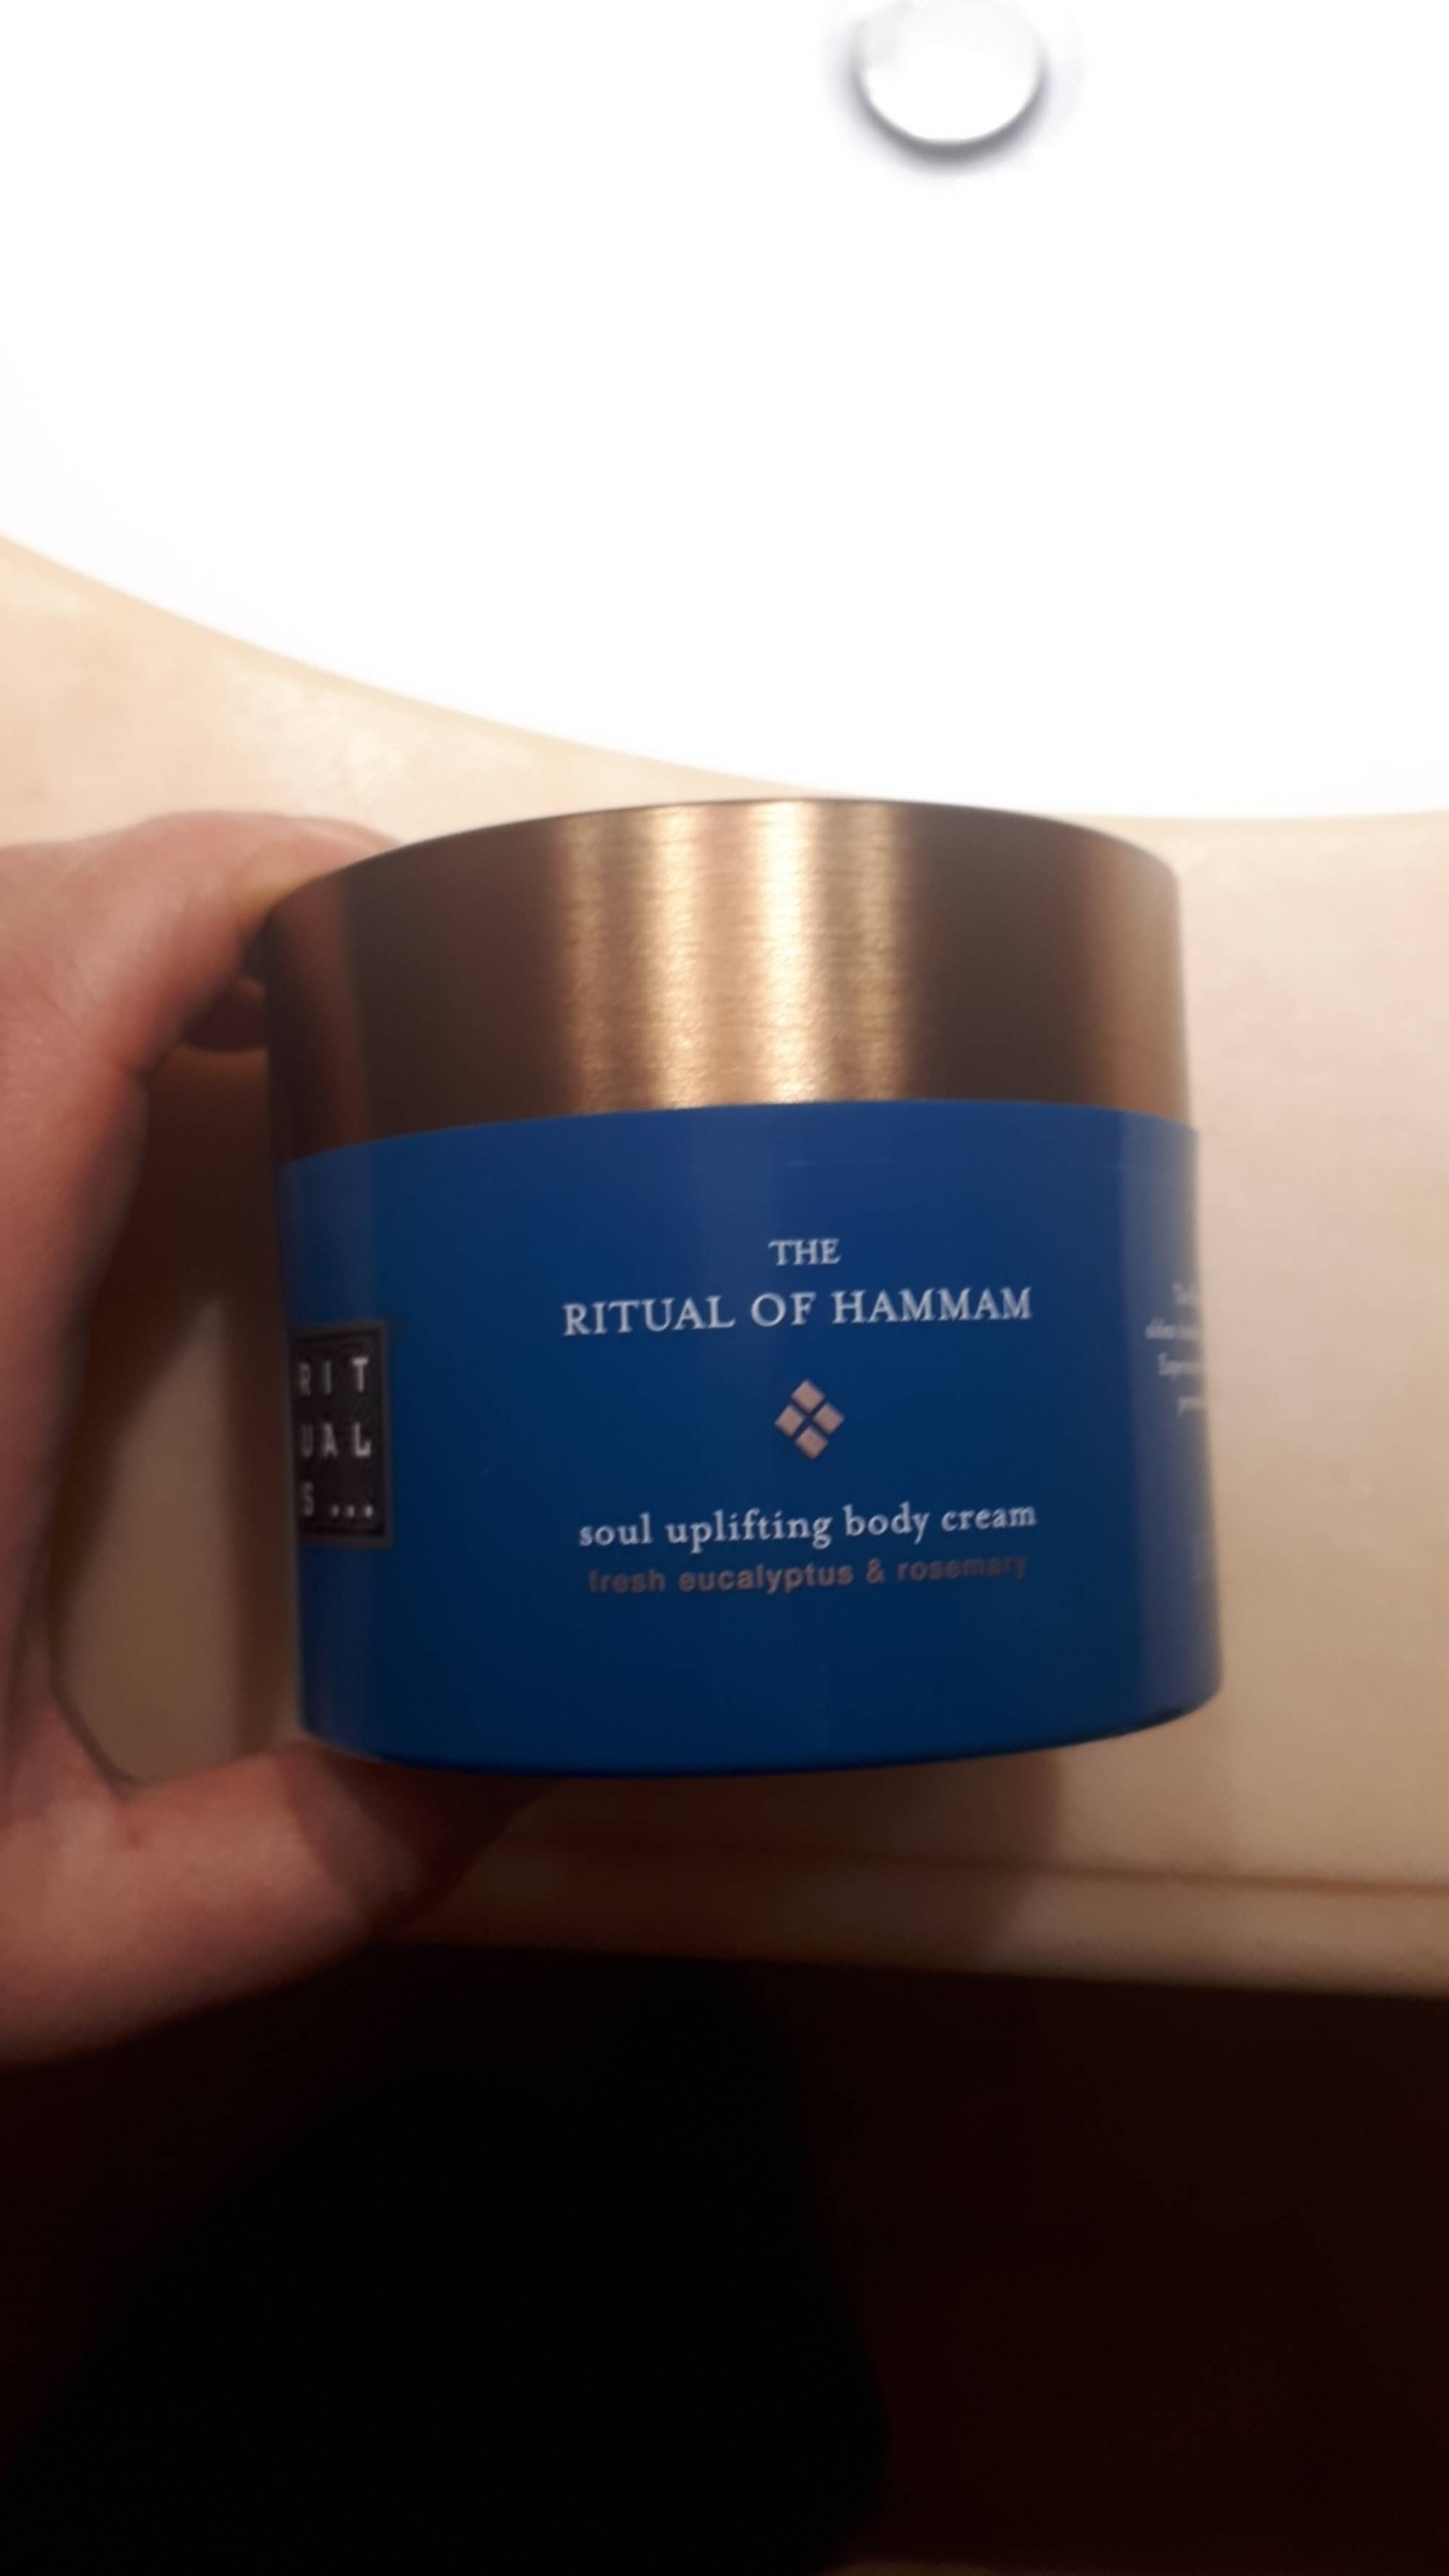 RITUALS - The Ritual of Hammam - Soul uplifting body cream